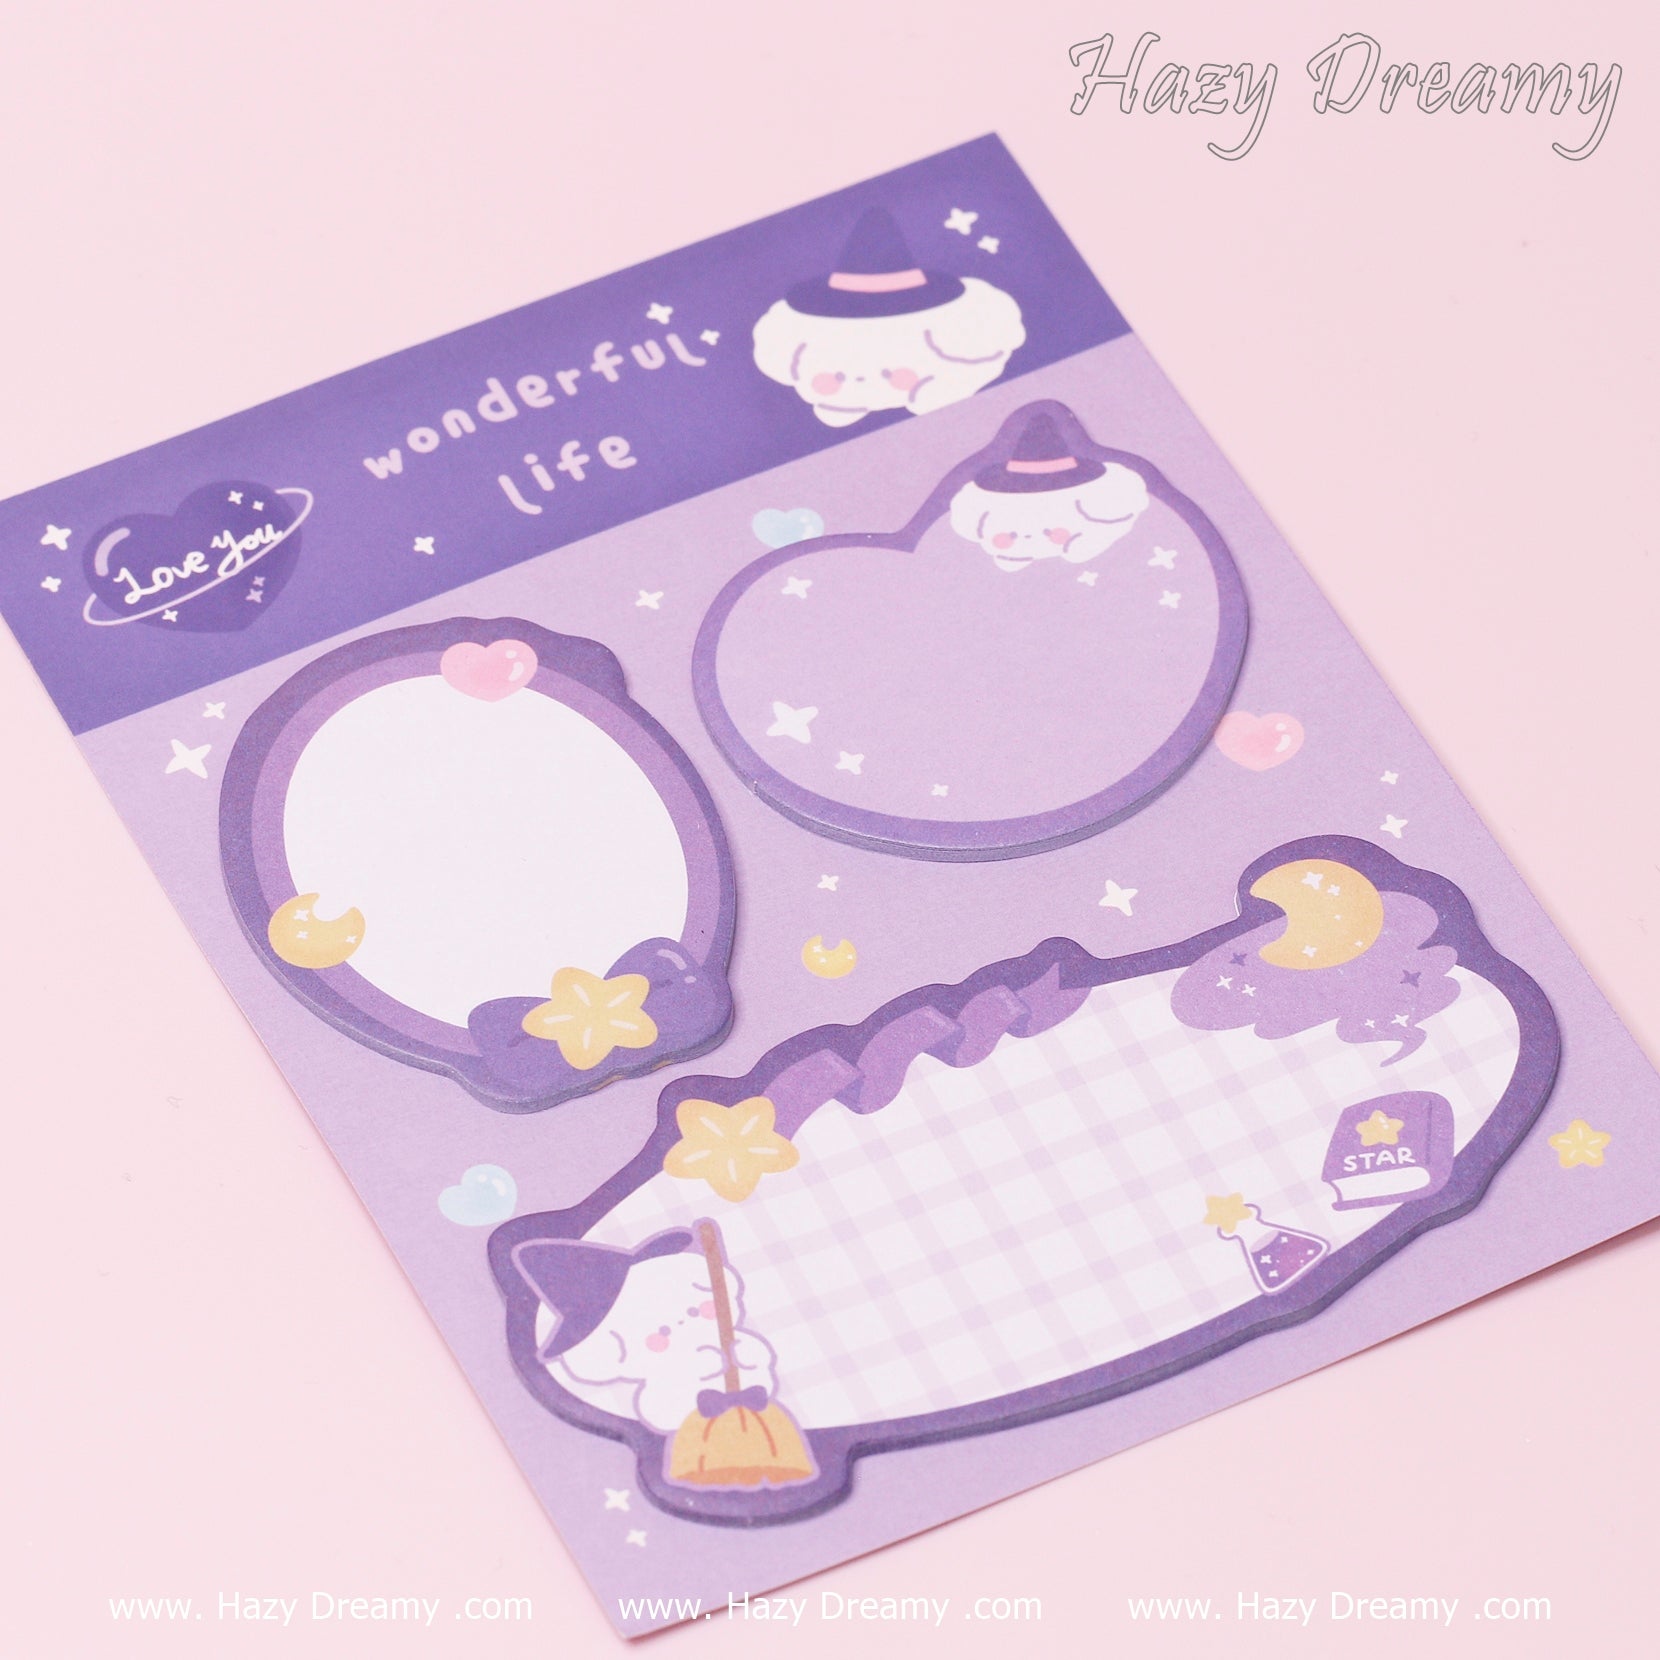 Kawaii Cartoon Animal Sticky Notes - Hazy Dreamy: School Stationery